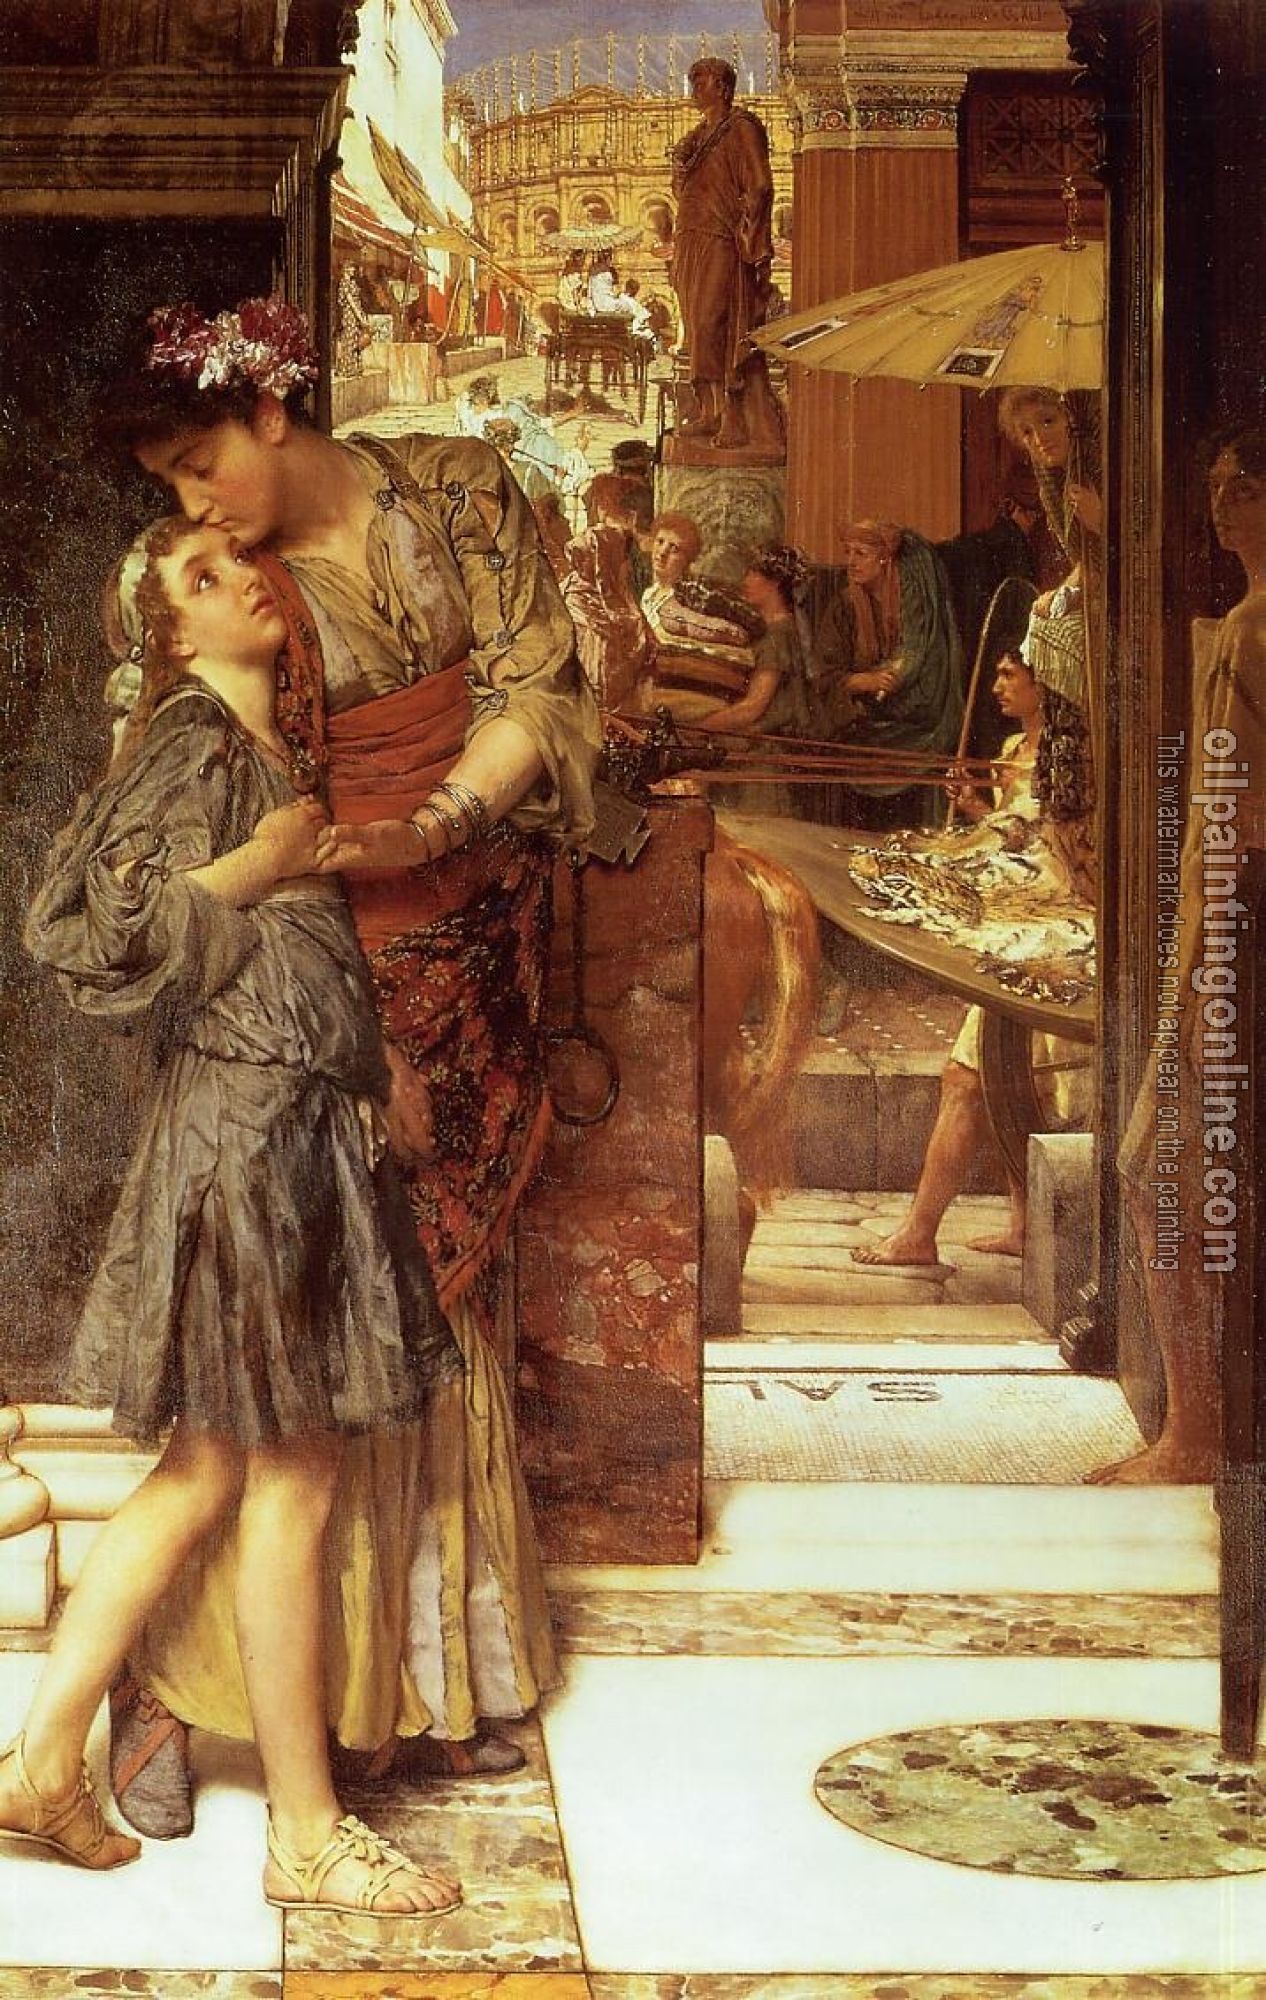 Alma-Tadema, Sir Lawrence - The Parting Kiss